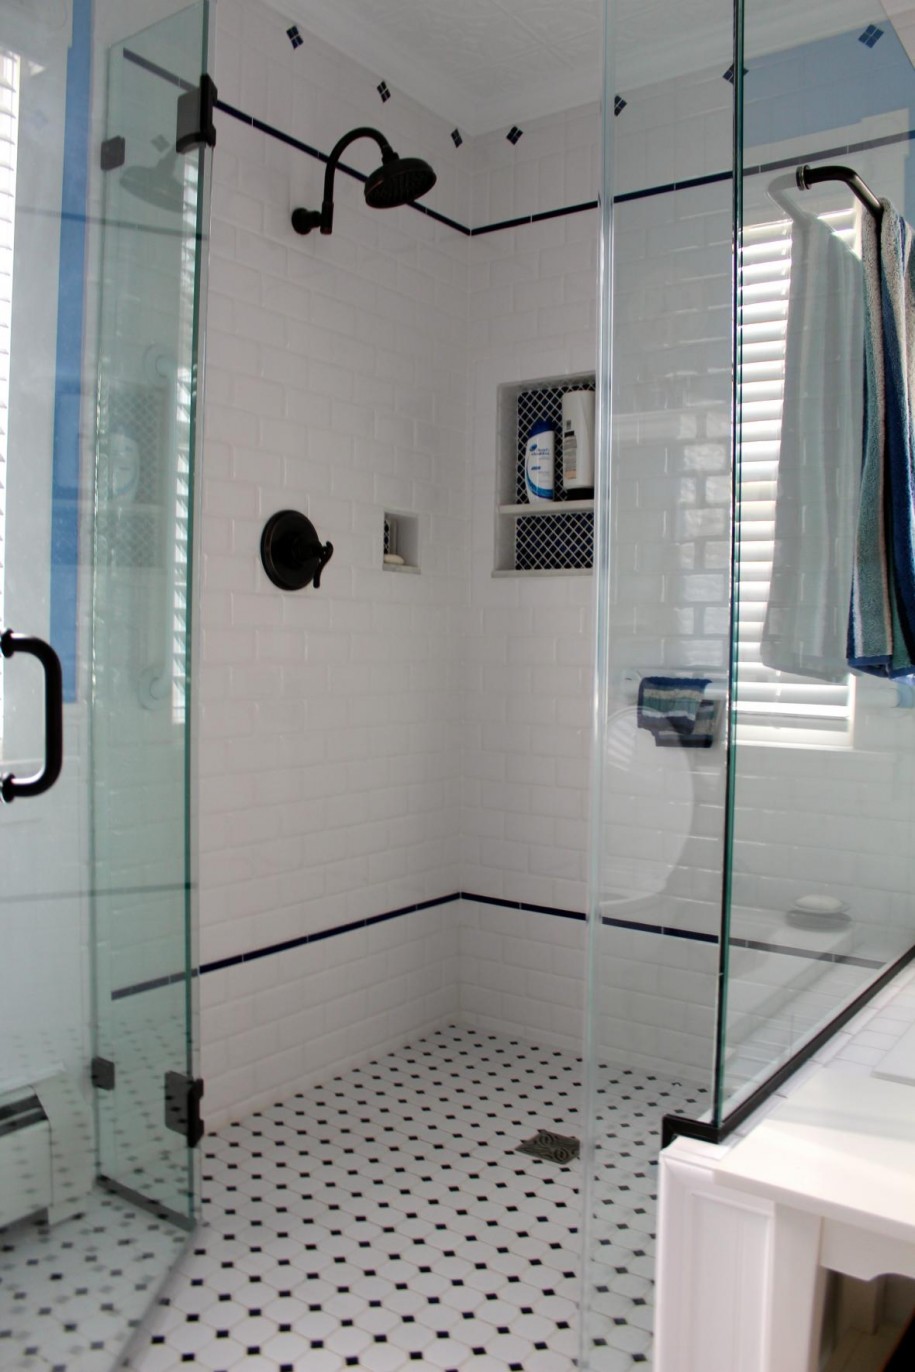 bathroom-exciting-bathroom-decorating-design-ideas-with-square-white-tile-bathroom-wall-including-black-and-white-tile-bathroom-floor-and-black-metal-shower-head-adorable-vintage-bathroom-tile-p